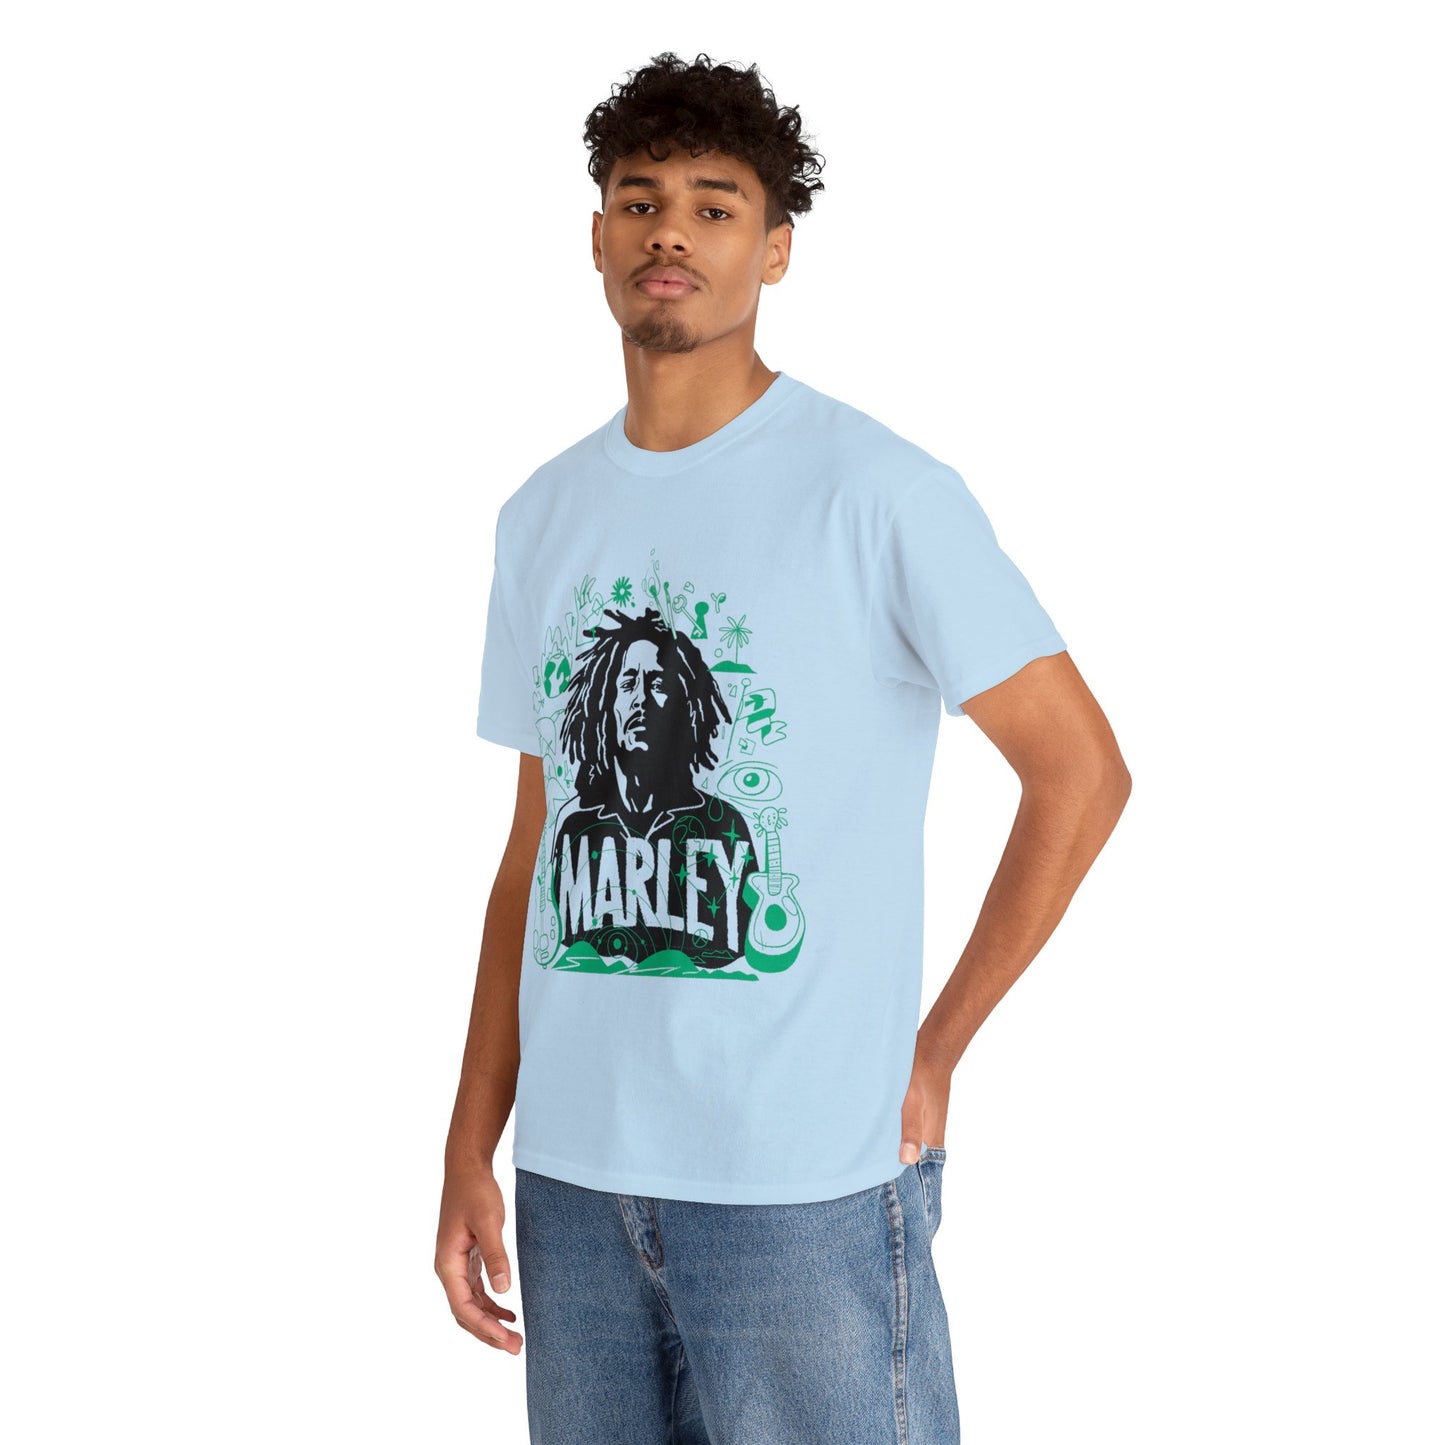 Bob Marley “Legend's Melody" Tribute T-shirt!